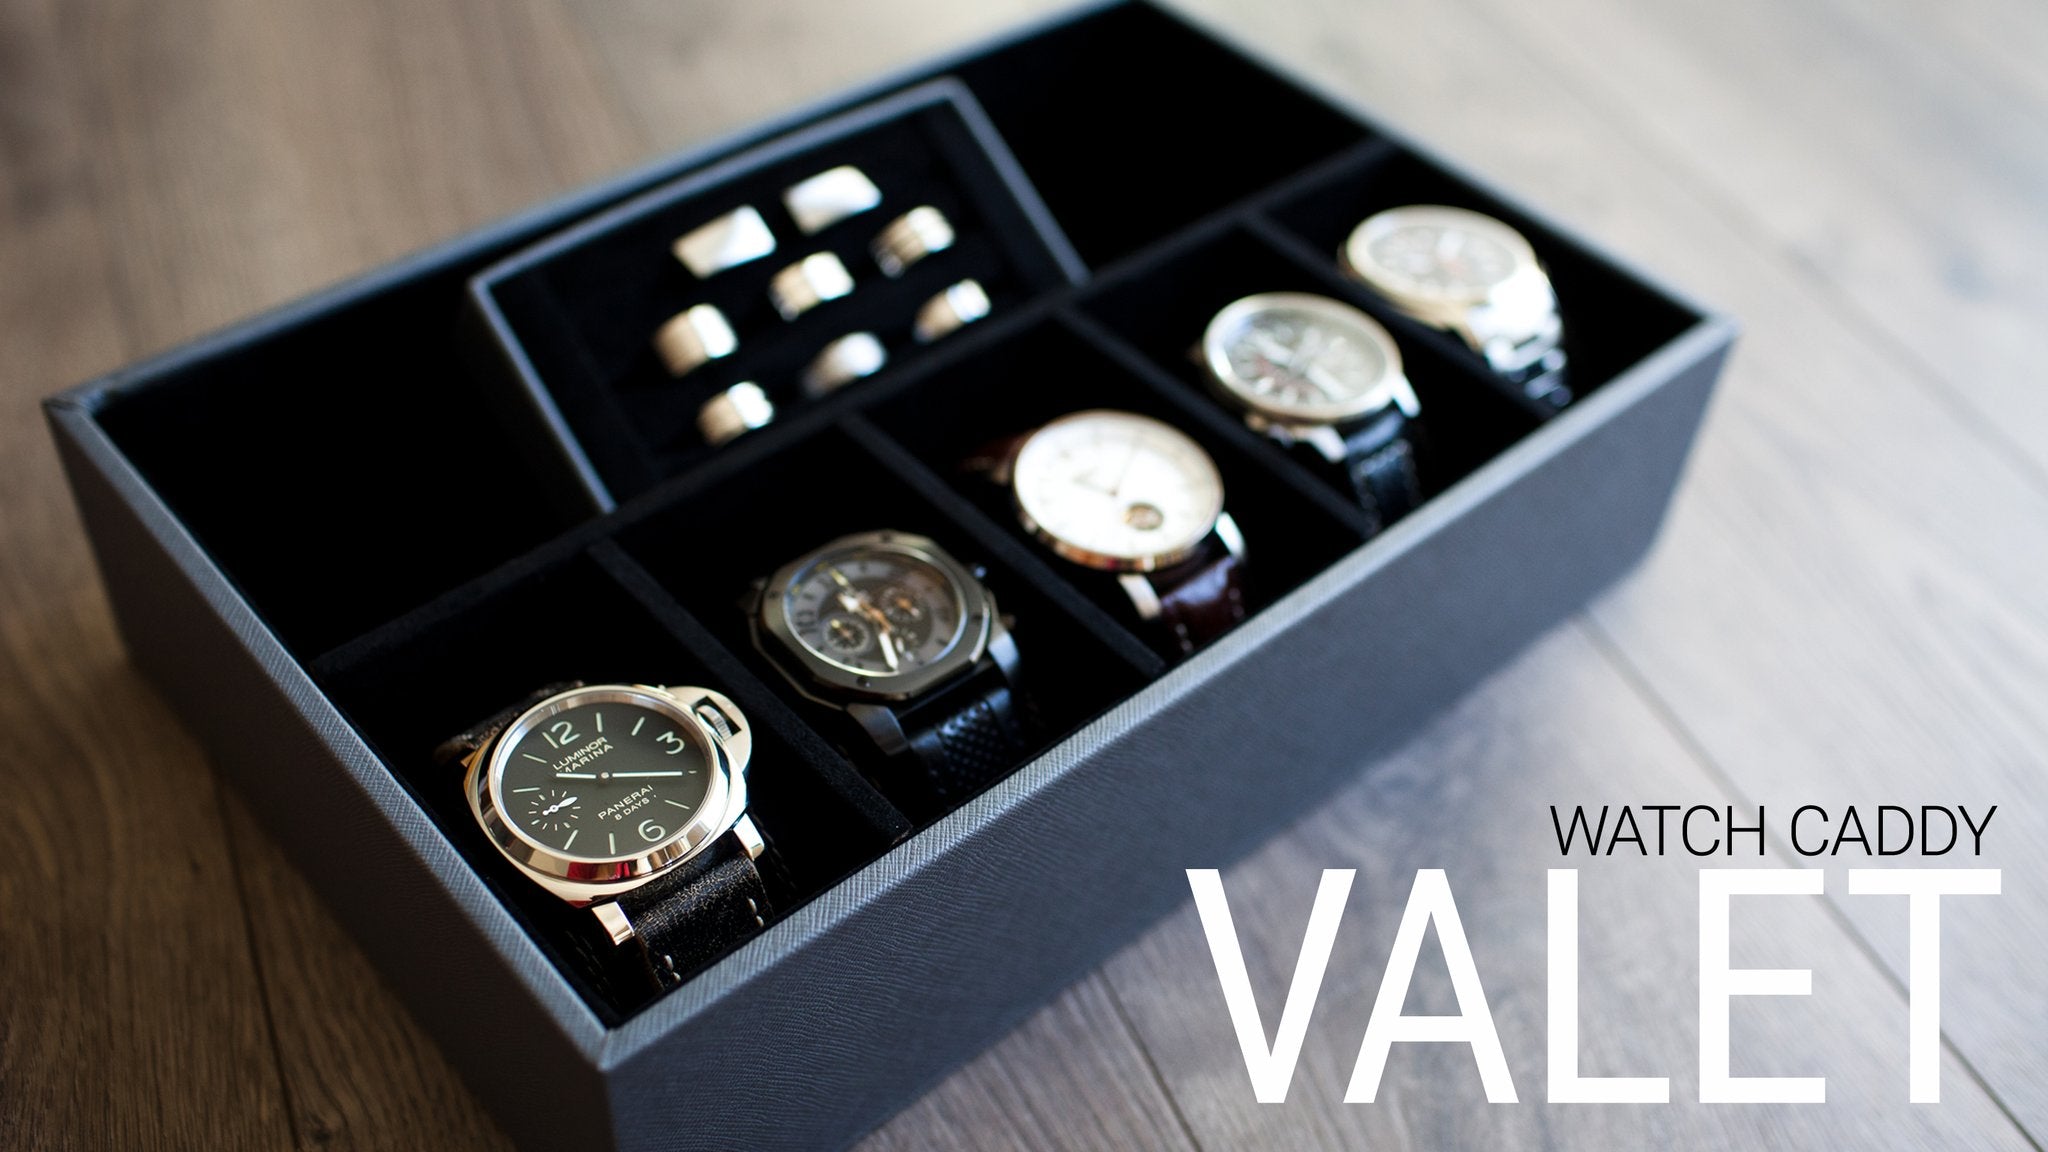 Watch Caddy Valet Tray Watch Box